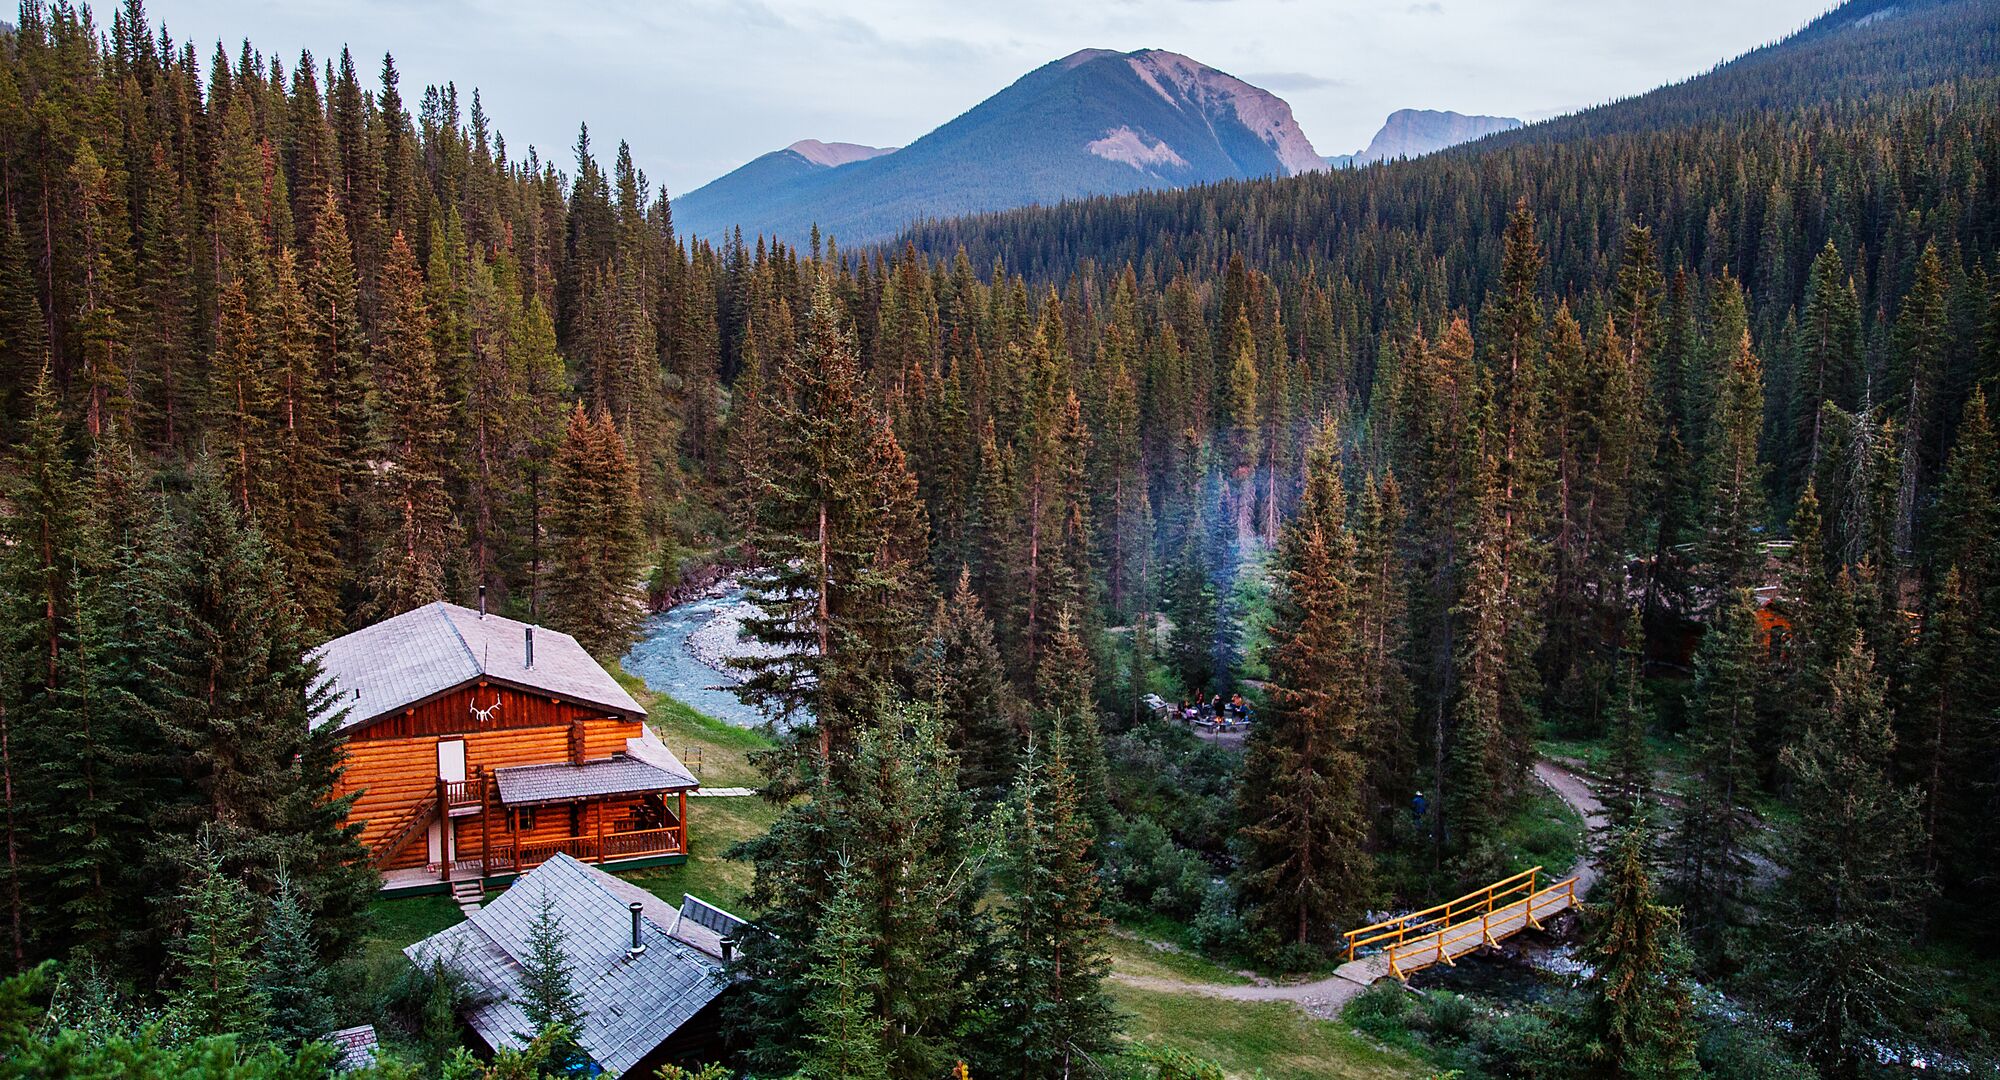 Sundance Lodge nestled in the backcountry of Banff National Park